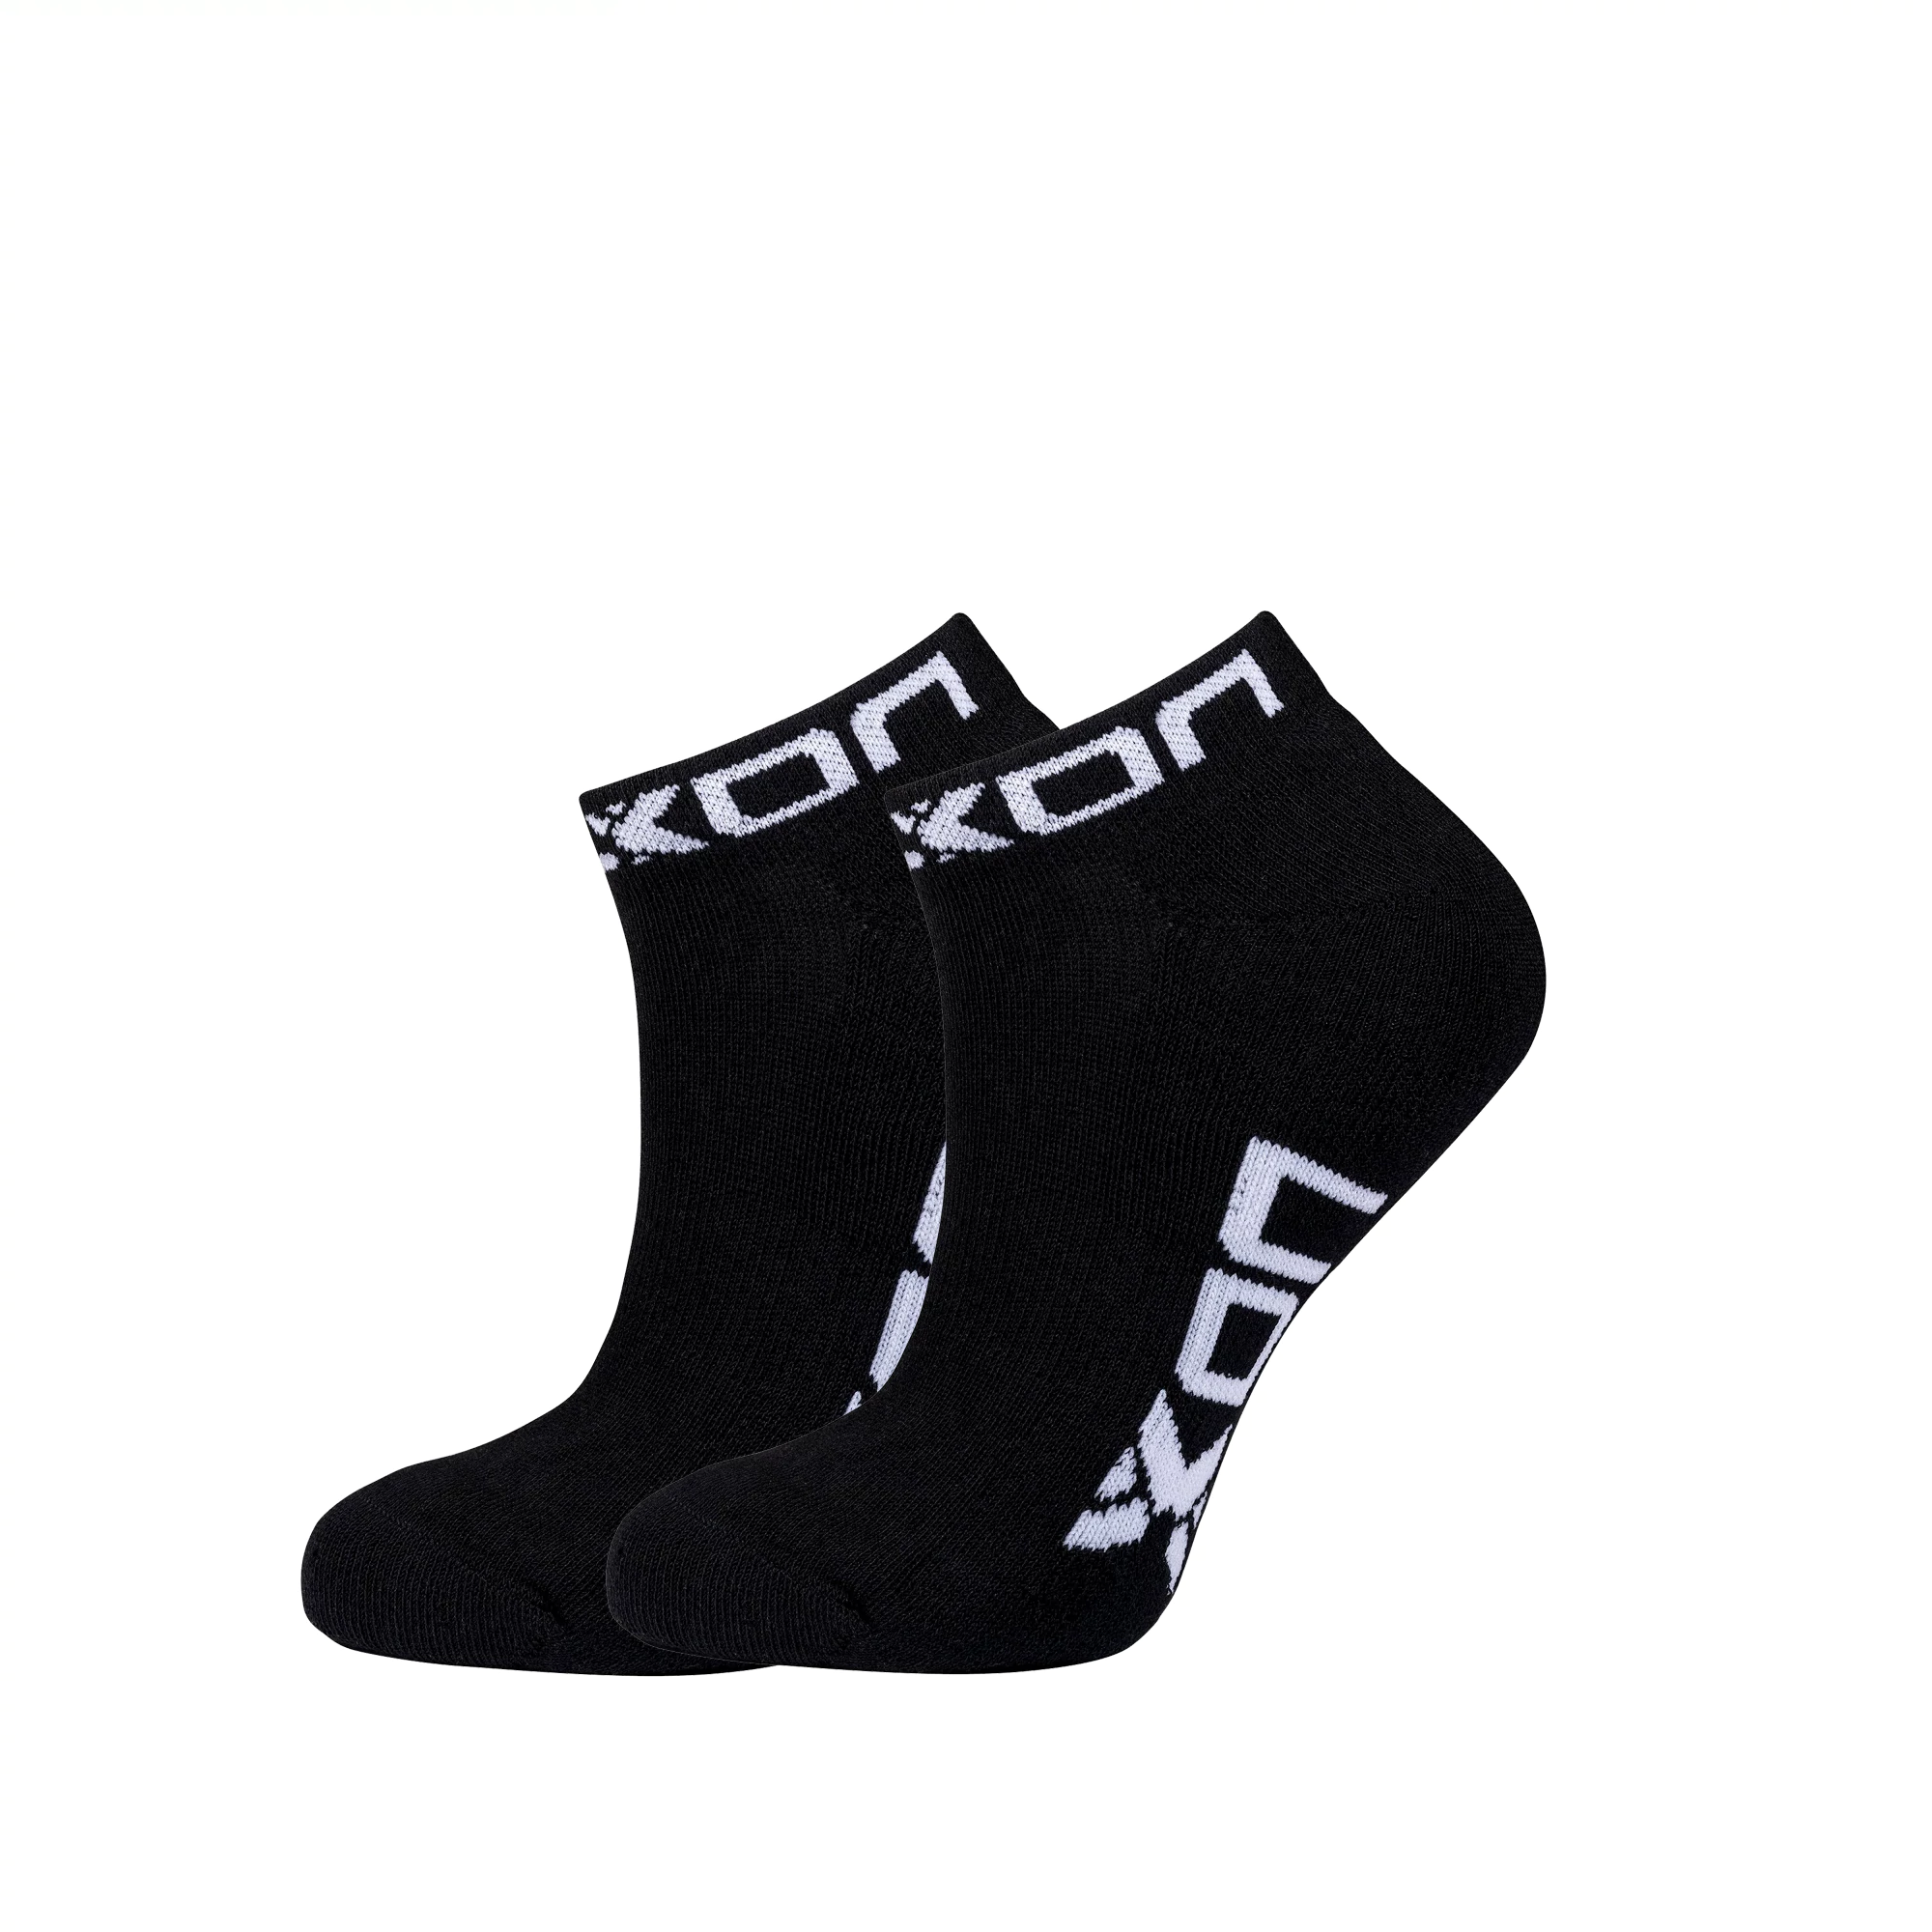 NOX Socks Ankle Length Black